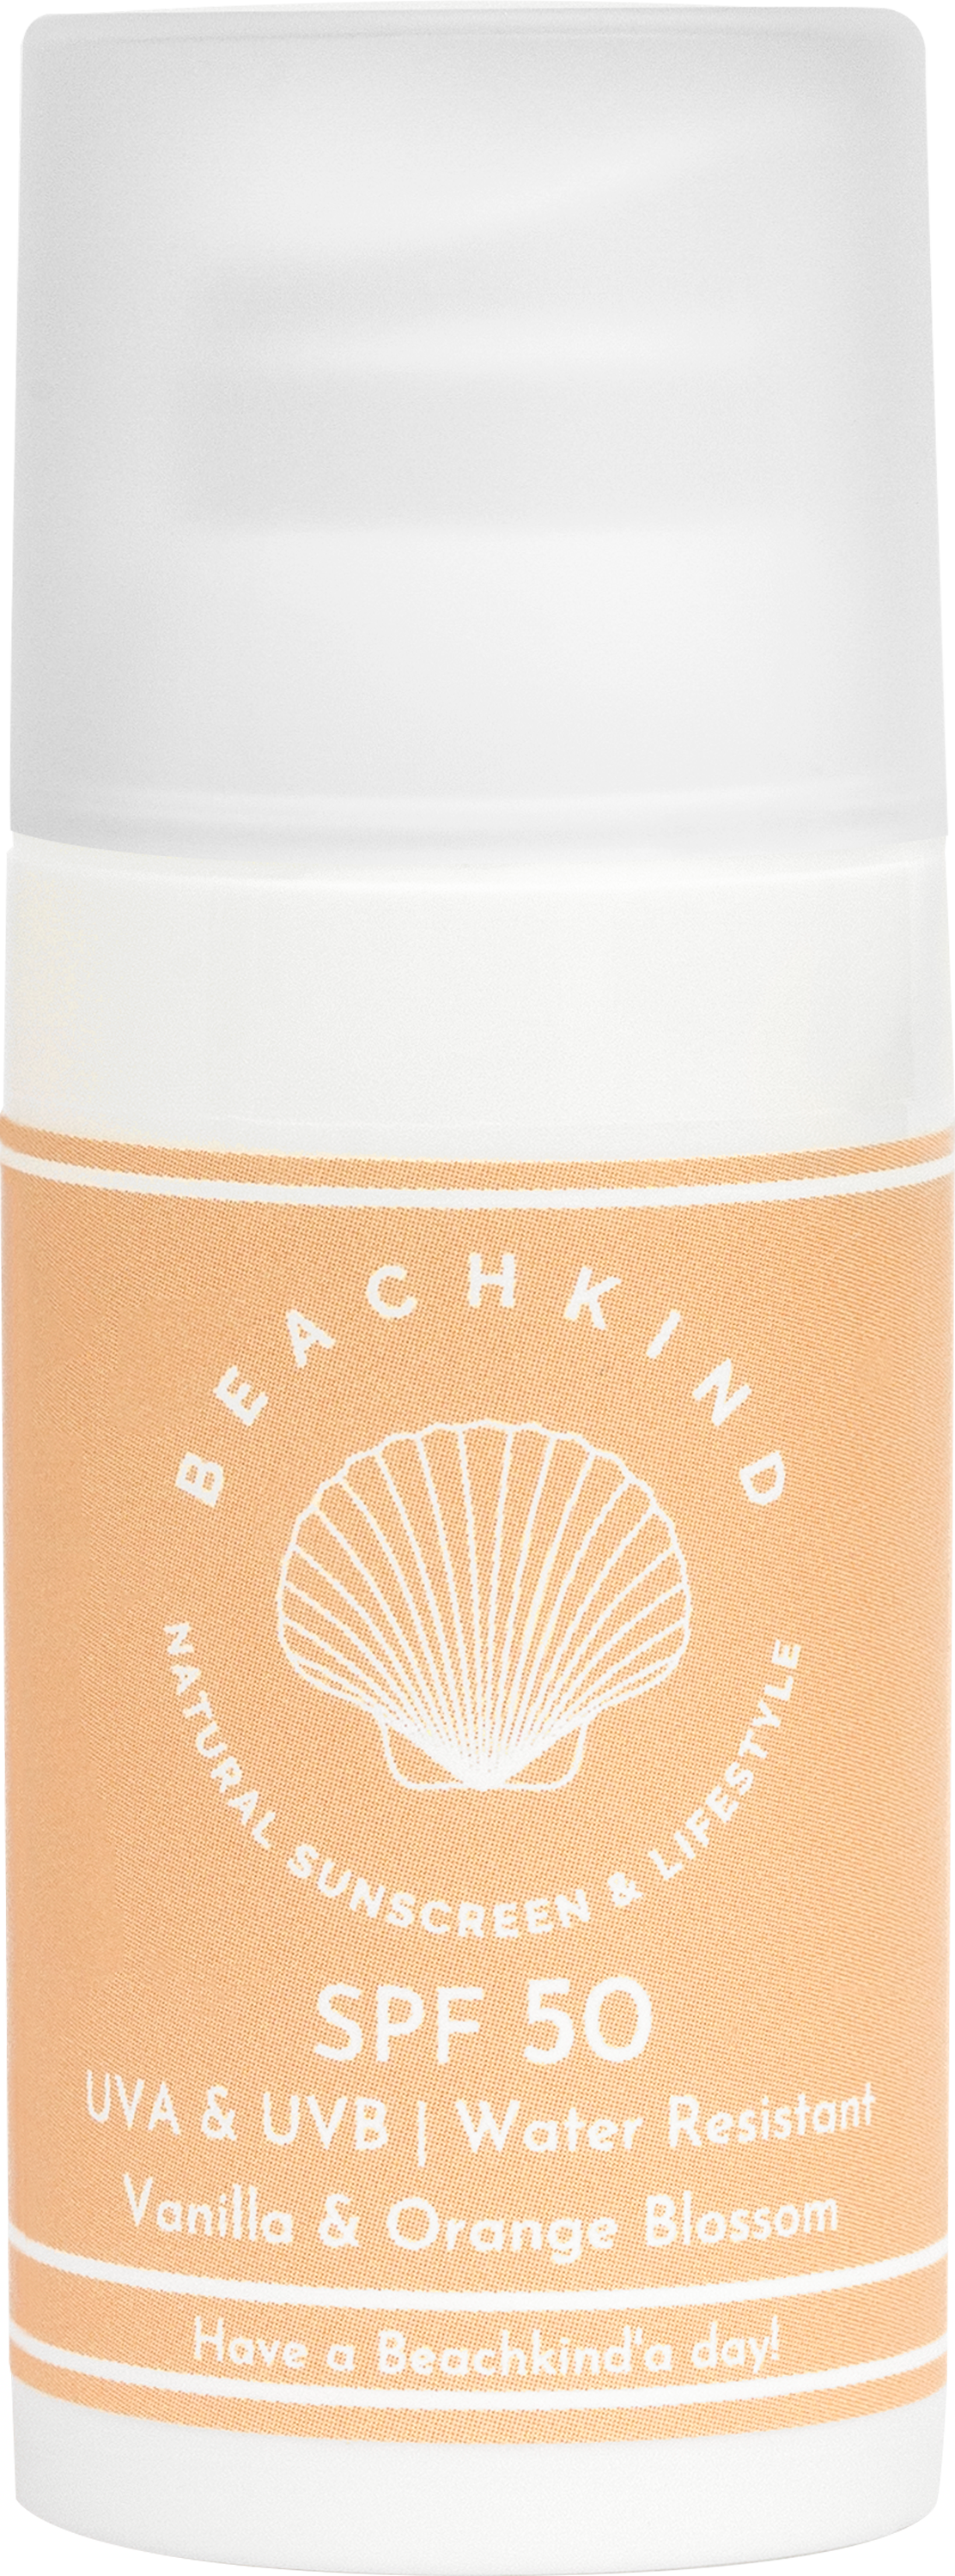 Beachkind Natural sunscreen SPF 50 15ml